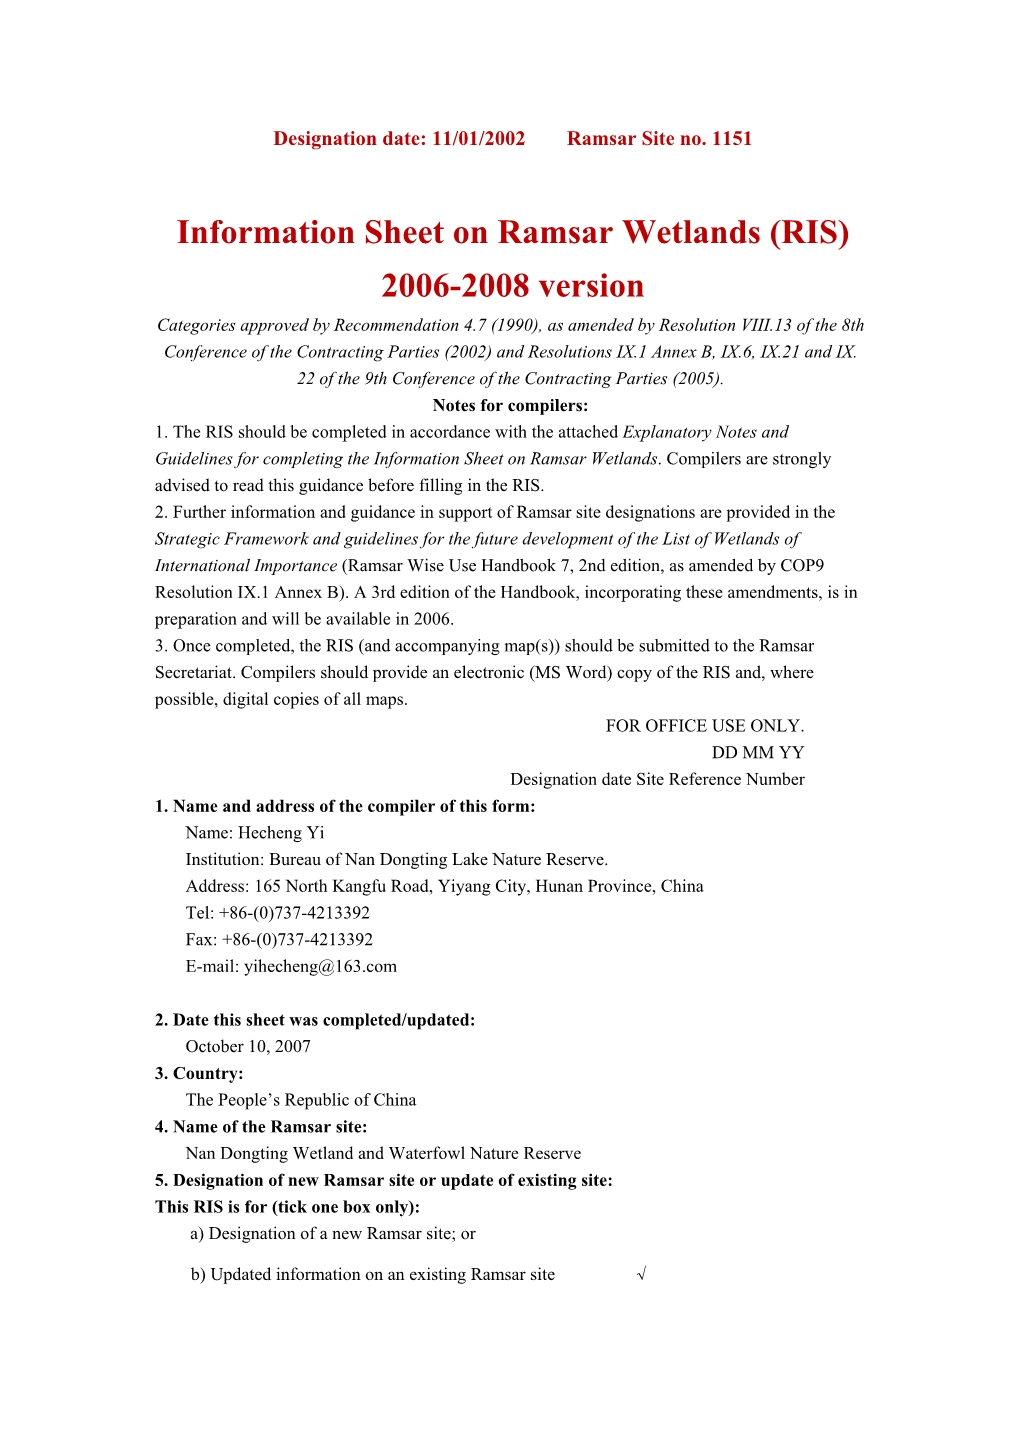 Information Sheet on Ramsar Wetlands (RIS) 2006-2008 Version